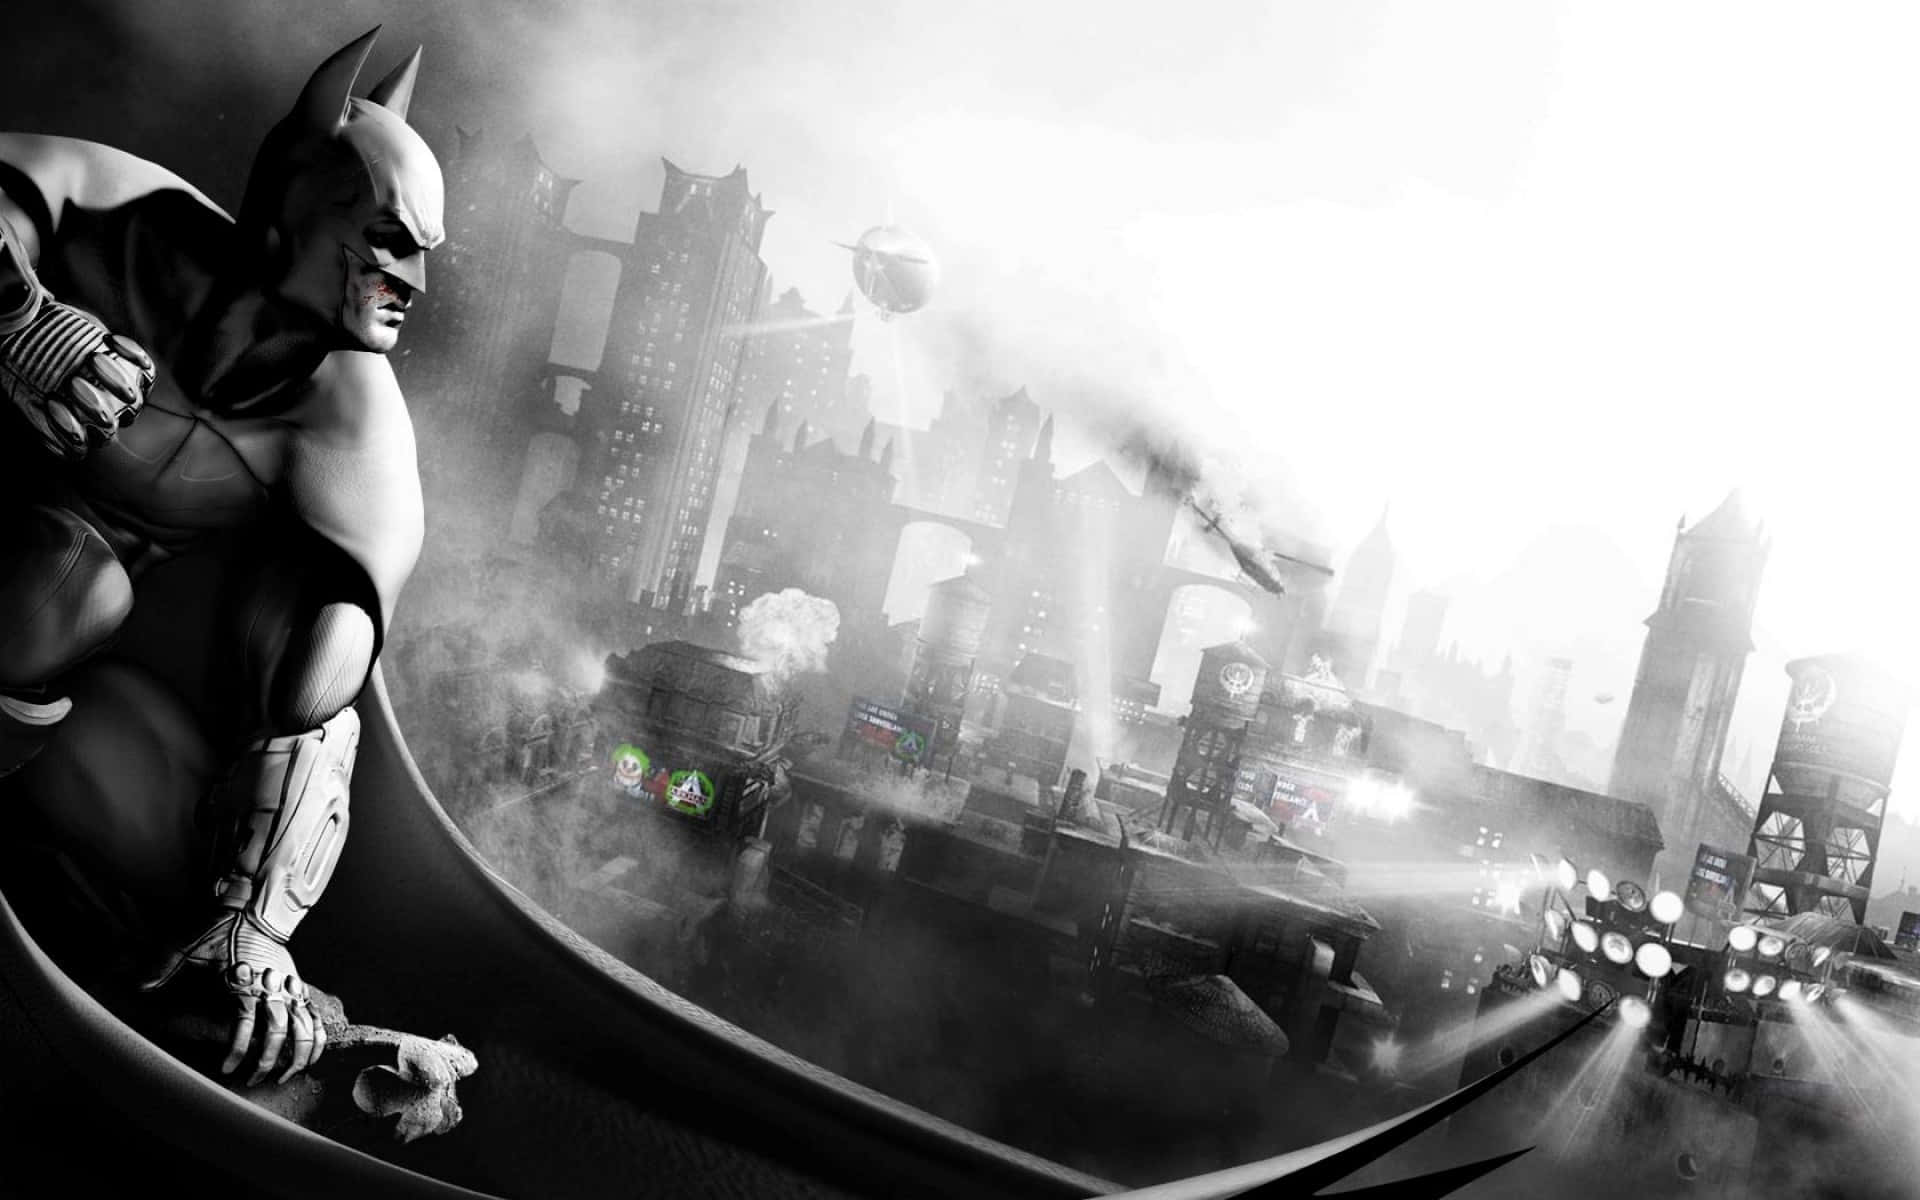 Batman protecting Gotham City in Arkham